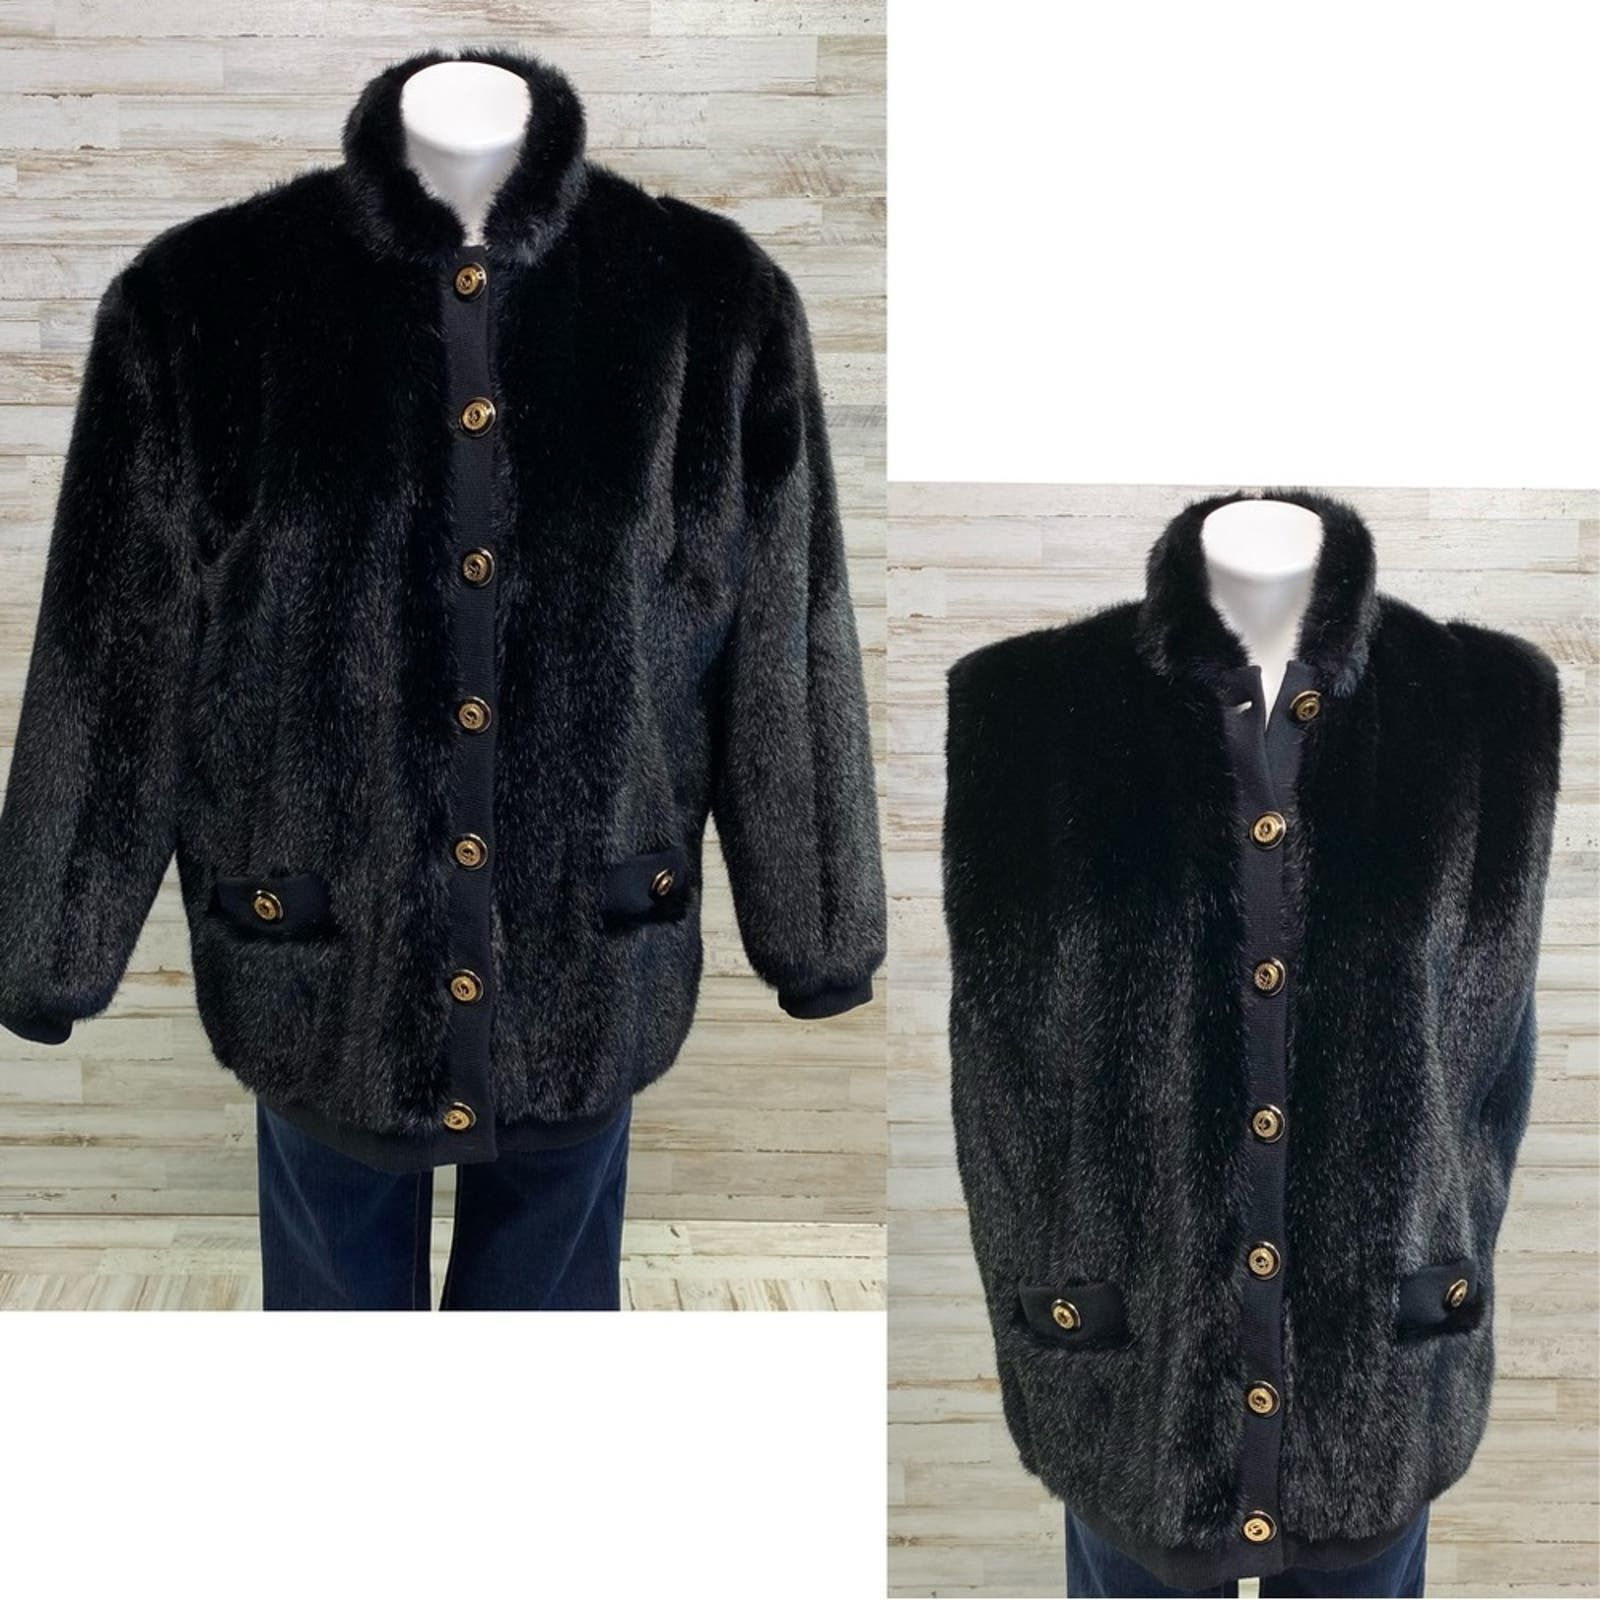 St. John Couture St. John Collection by Marie Gray Faux Fur Jacket Vest XS Size XS / US 0-2 / IT 36-38 - 1 Preview